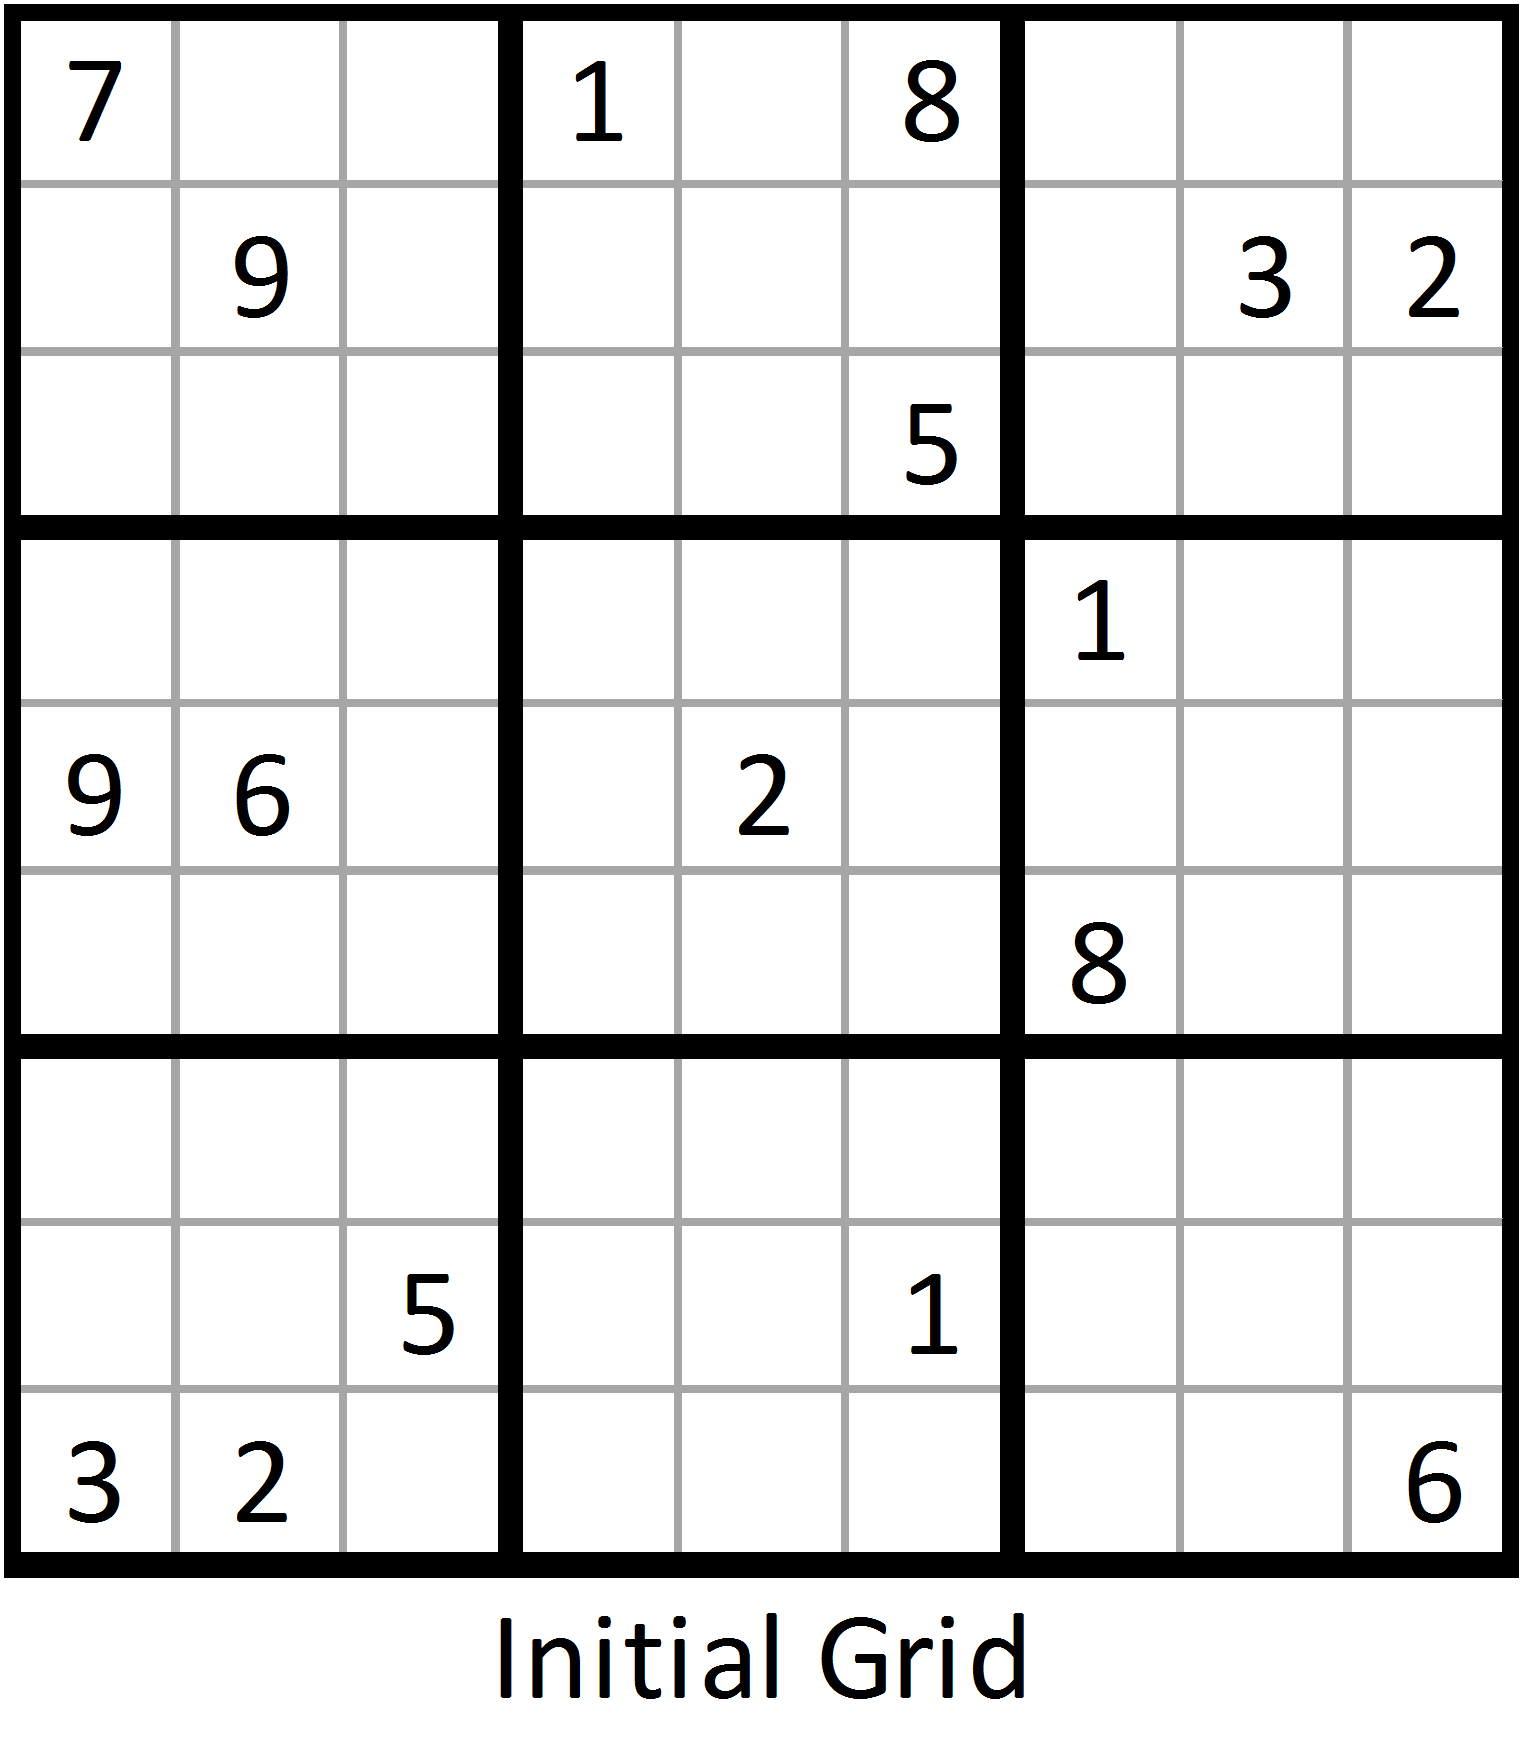 sudoku games